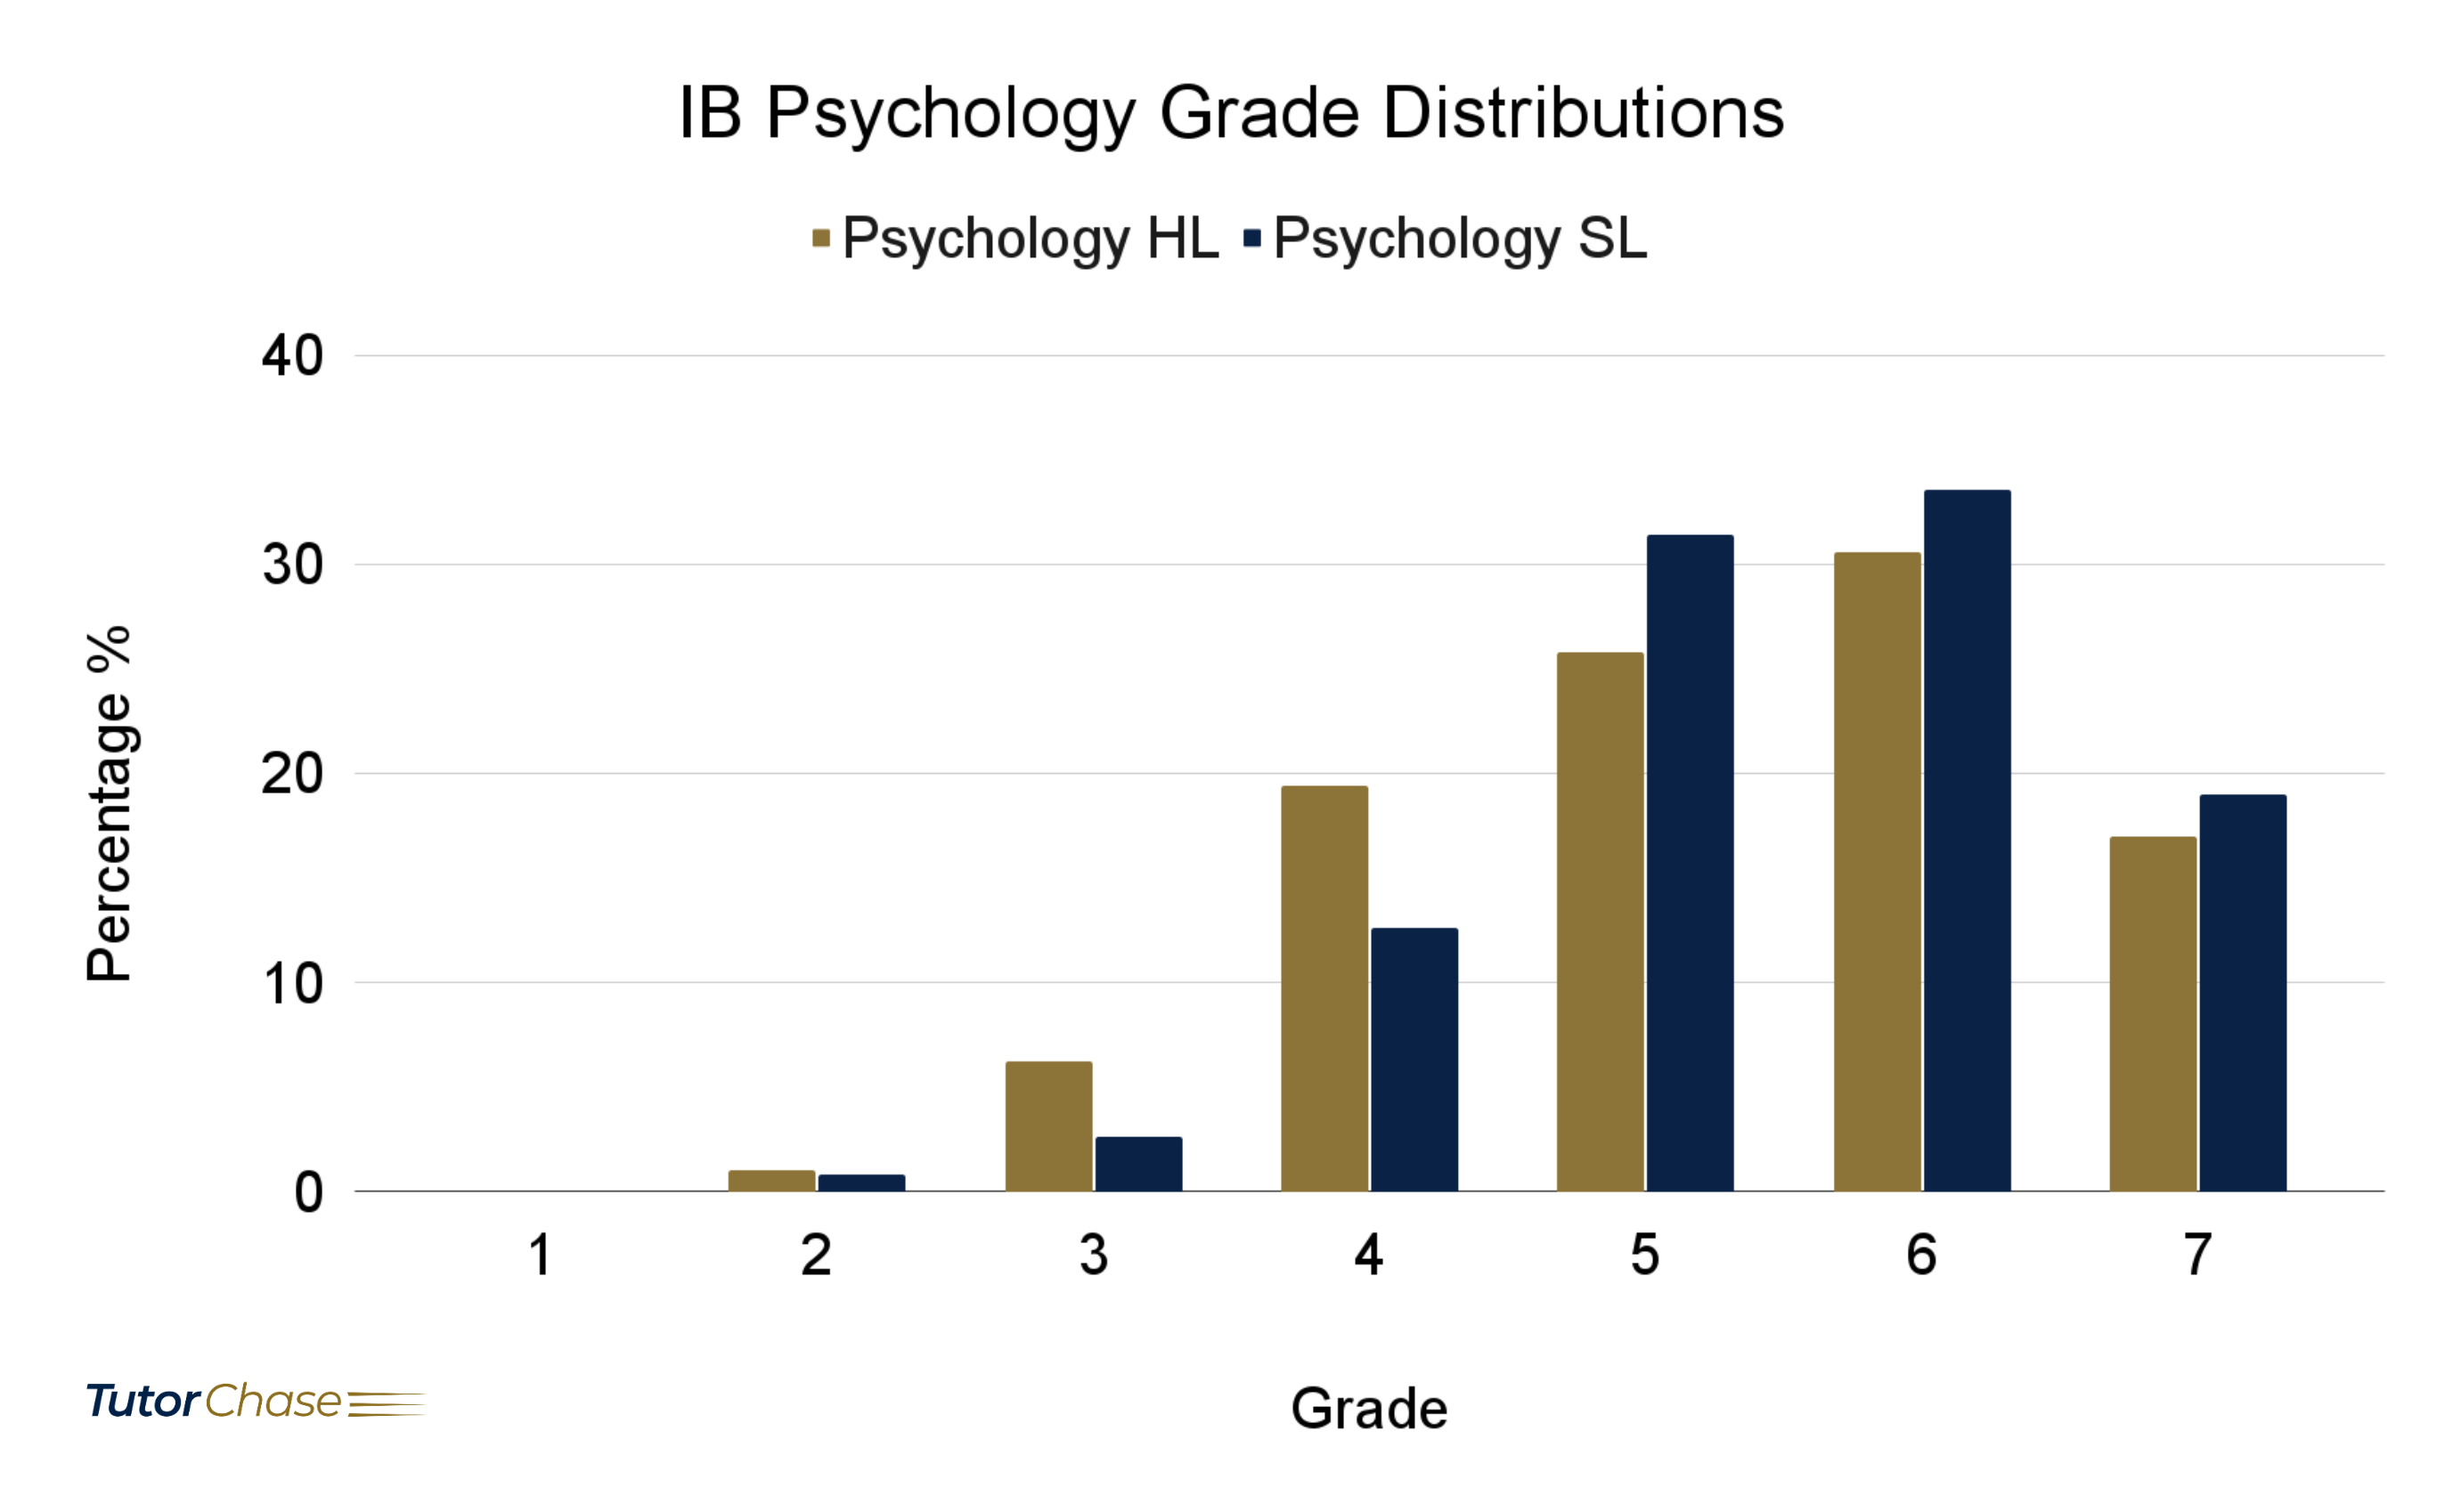 IB Psychology Grade Distribution